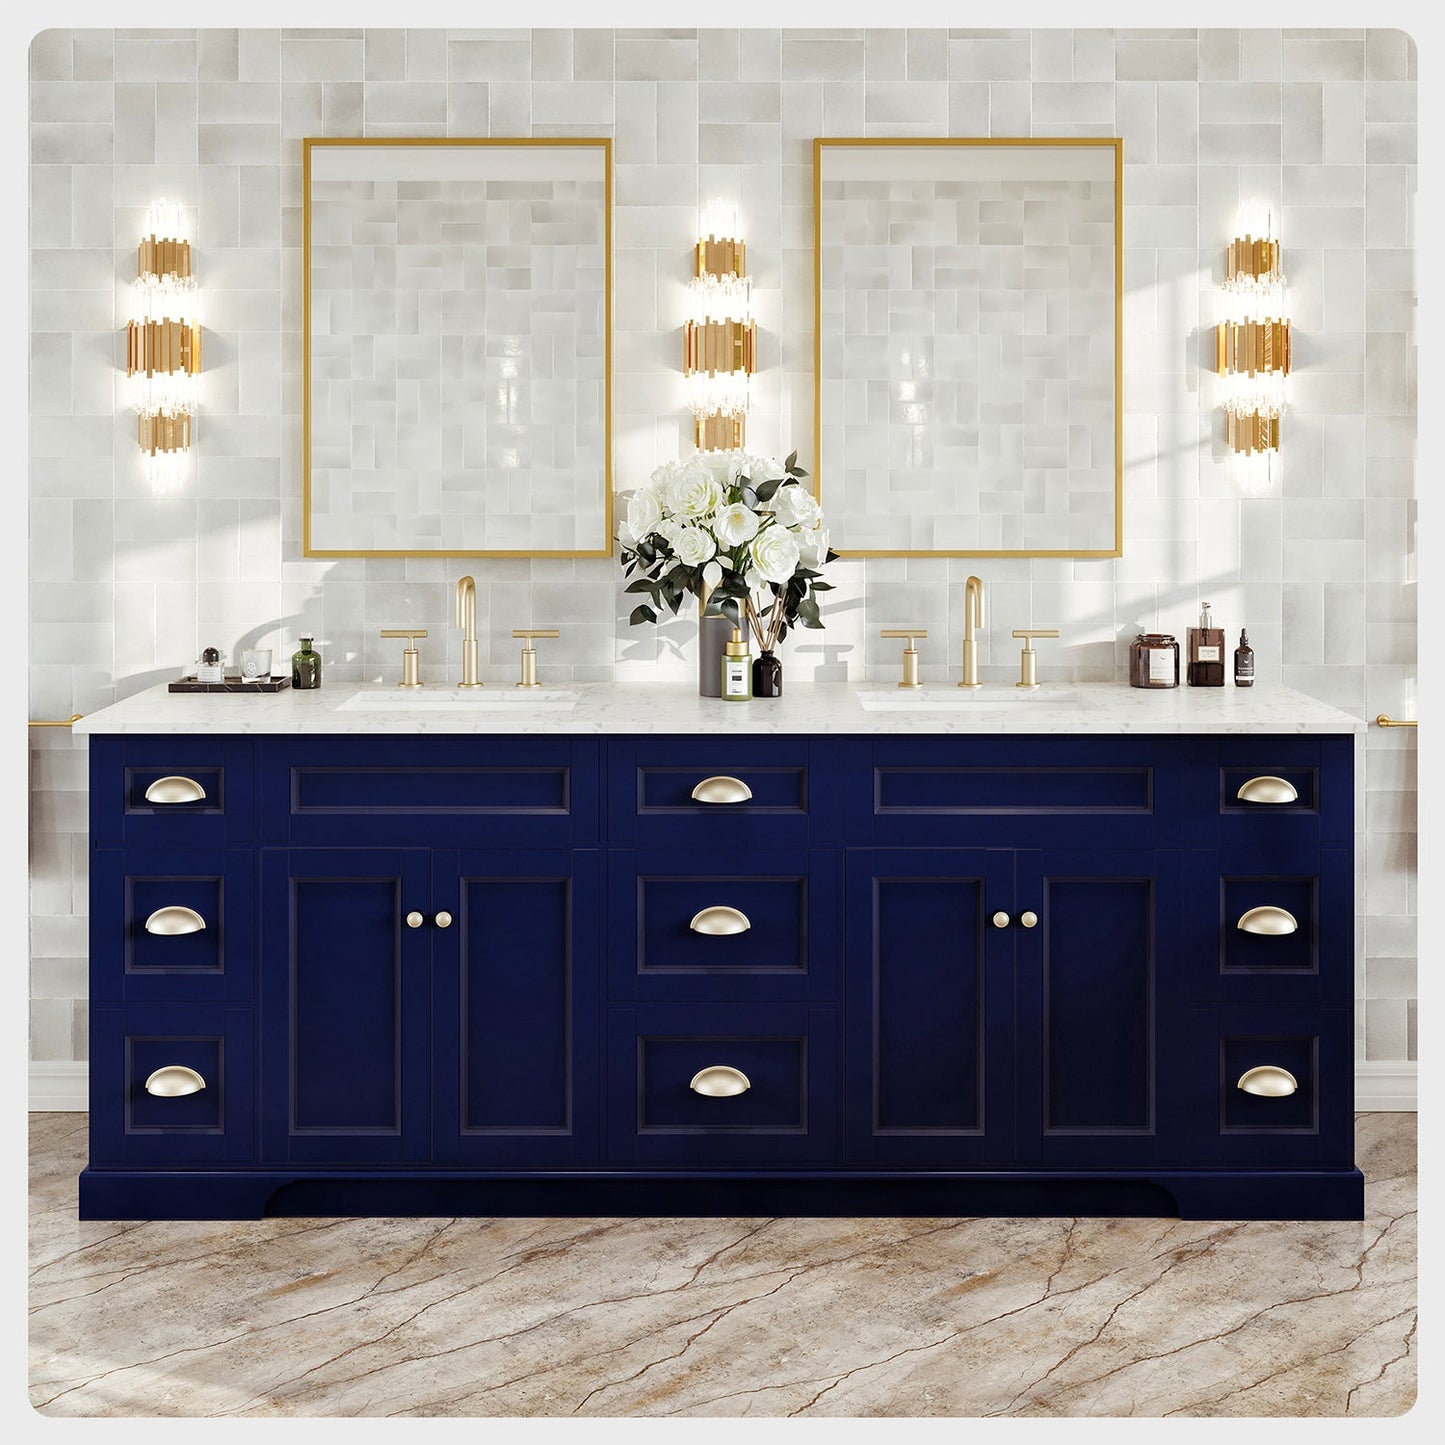 Epic 84"W x 22"D Blue Double Sink Bathroom Vanity with Carrara Quartz Countertop and Undermount Porcelain Sink